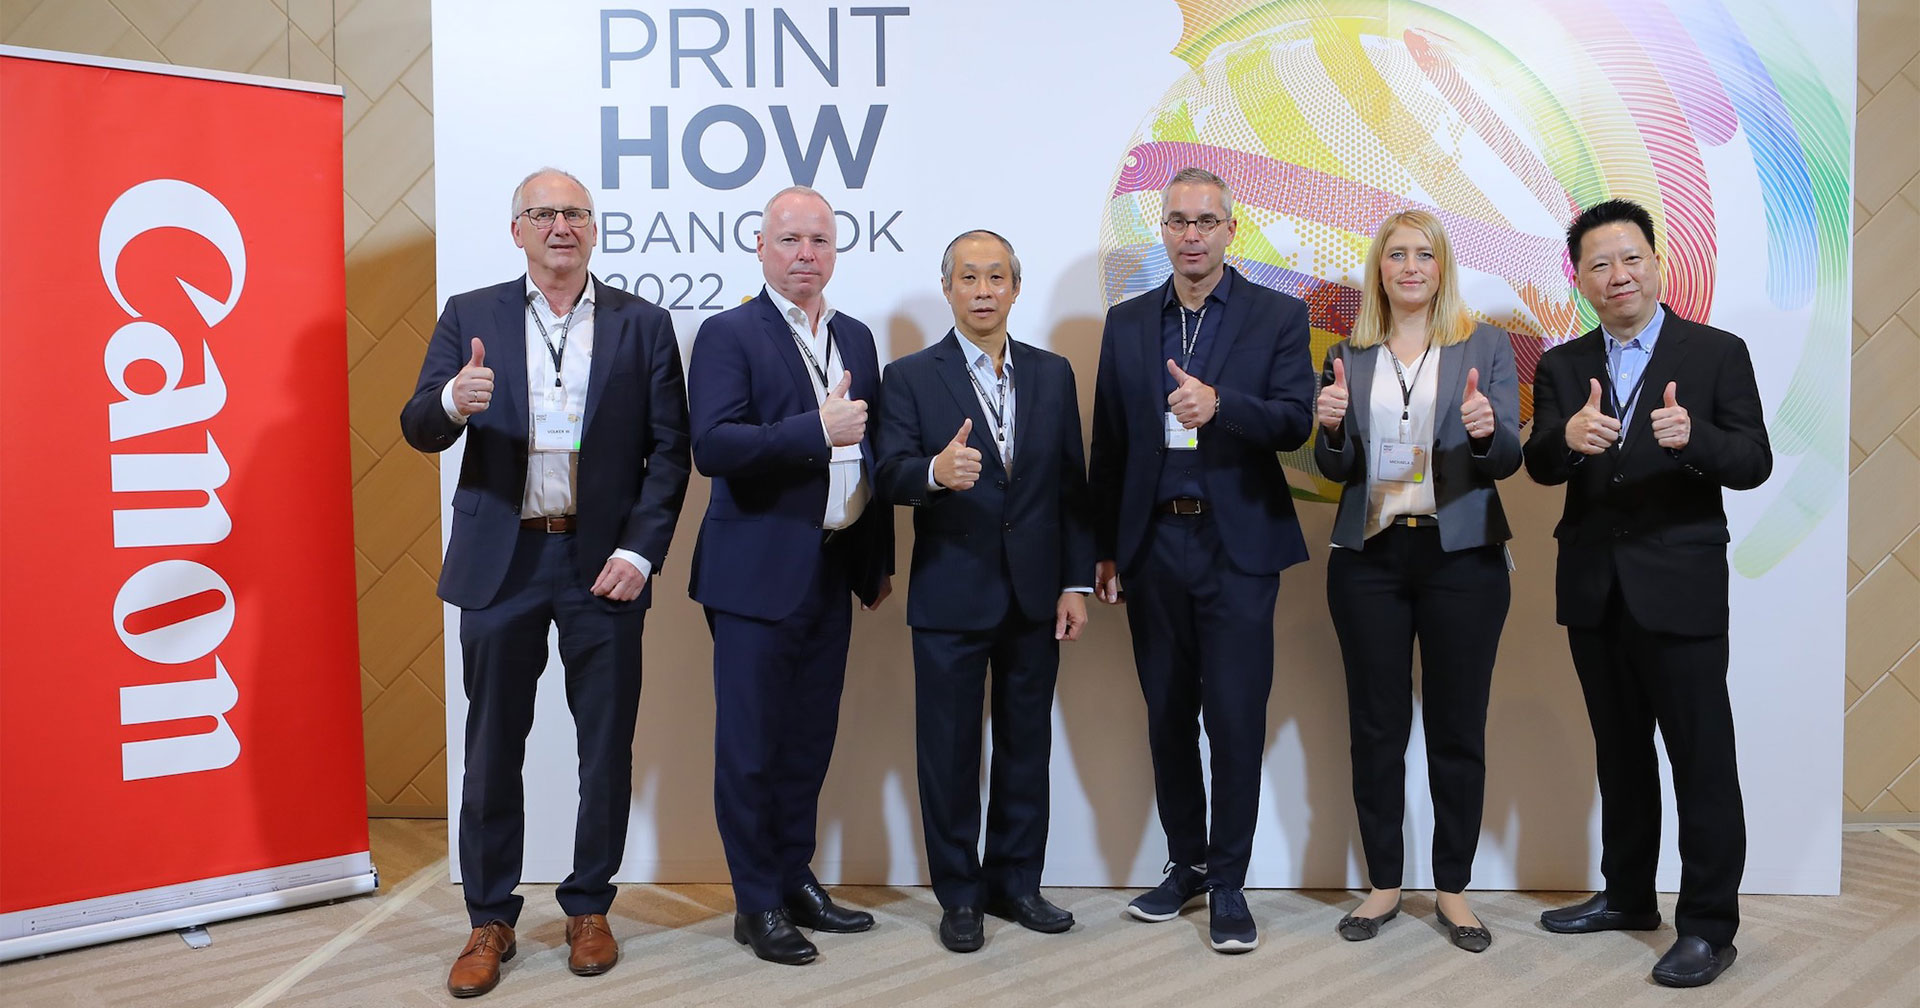 Canon จัดงาน PrintHOW Bangkok 2022 ครั้งแรกในไทย ดึงผู้เชี่ยวชาญระดับโลกร่วมเผยเทรนด์การพิมพ์ในโลกยุคใหม่